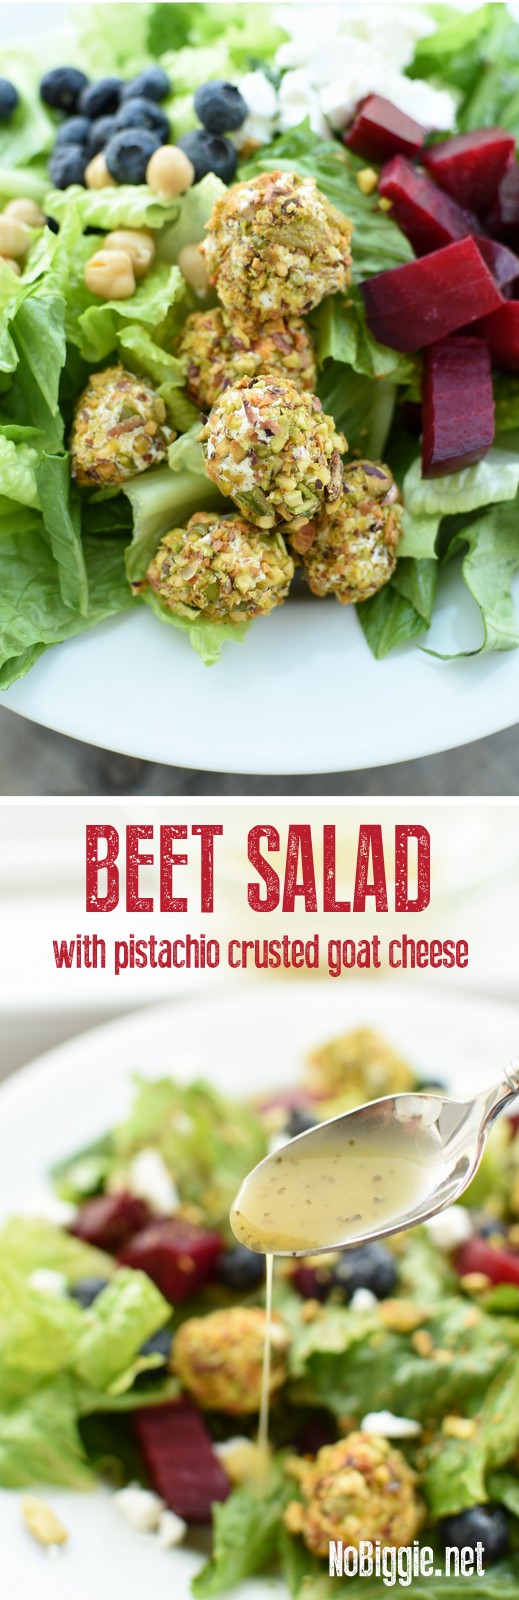 beet salad with goat cheese | NoBiggie.net